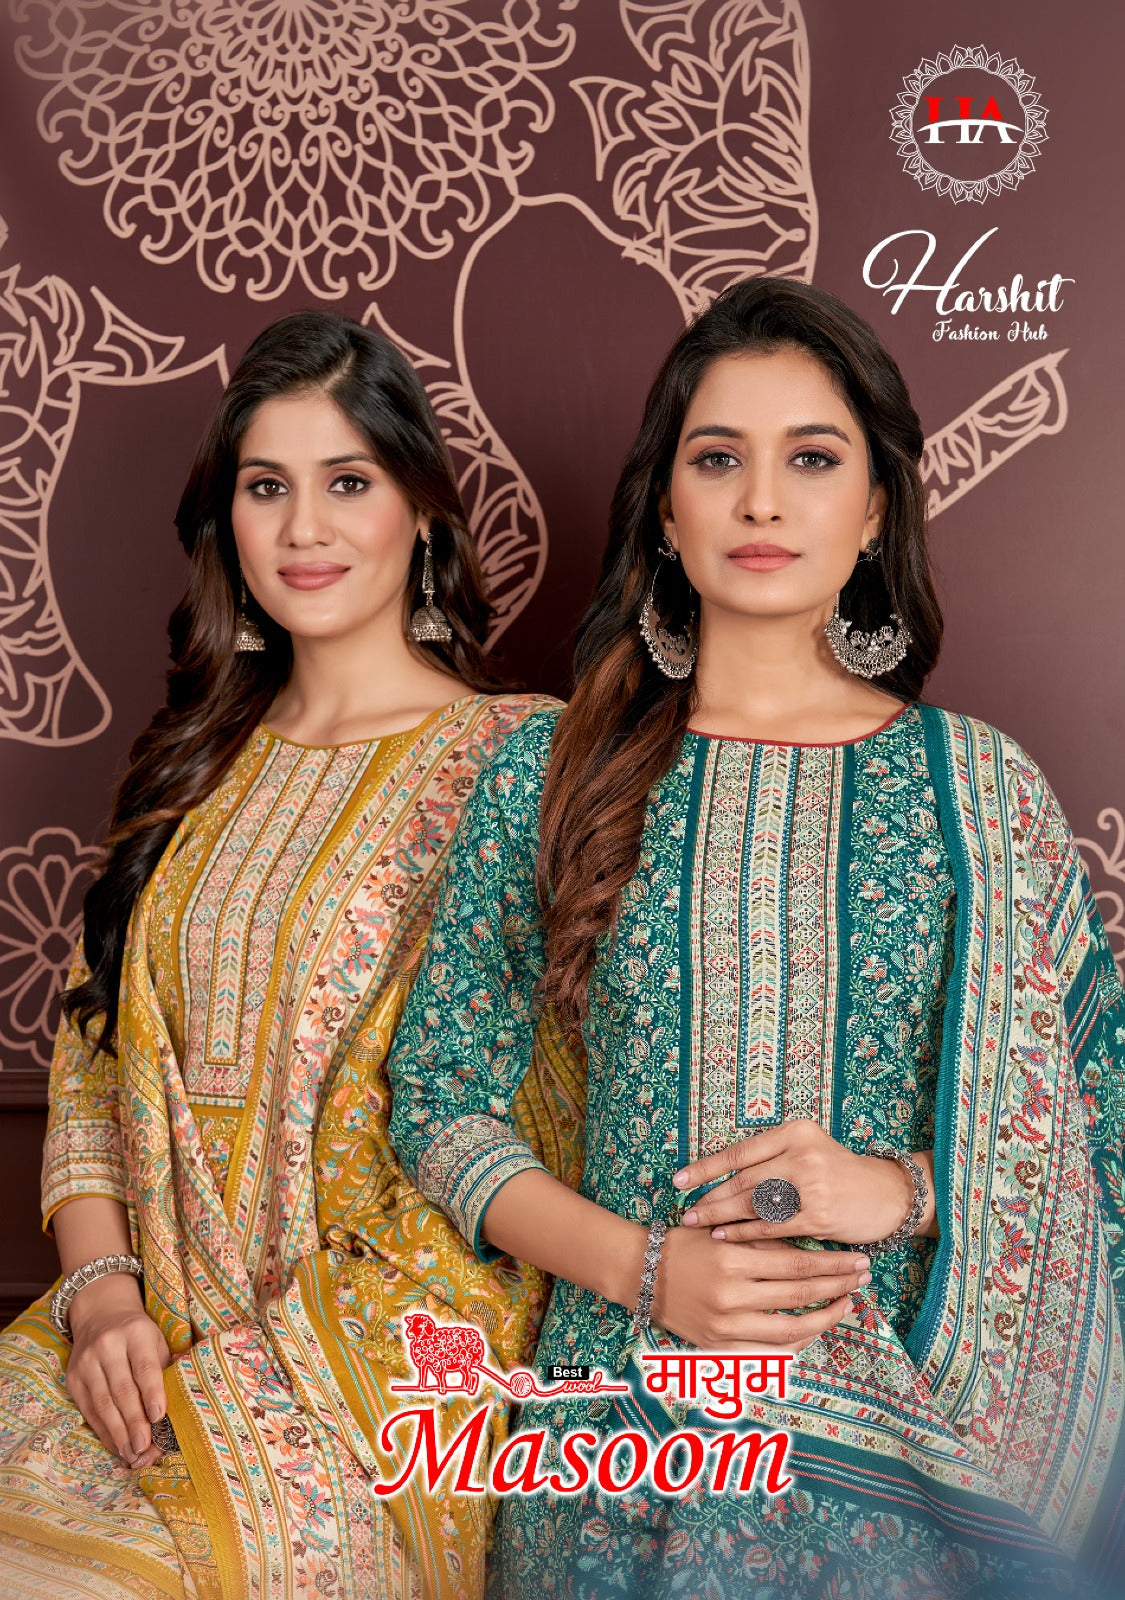 Harshit Fashion Hub Masoom Pashmina Spun Digital Print with Swarovski Diamond Work salwar suit latest collection - jilaniwholesalesuit